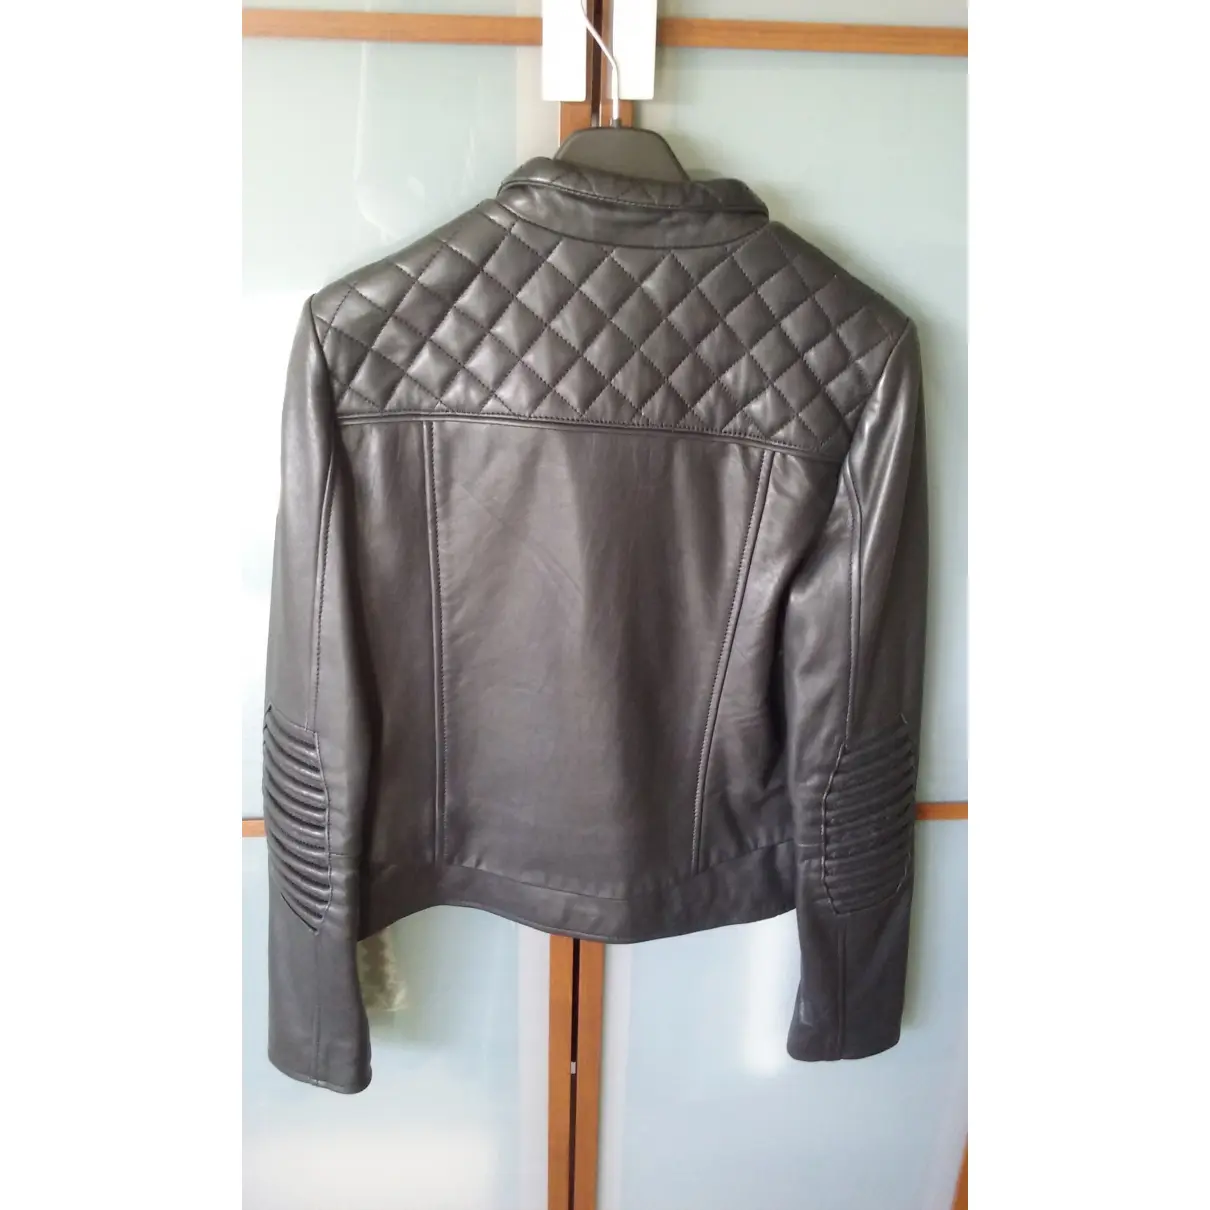 Buy The Kooples Leather biker jacket online